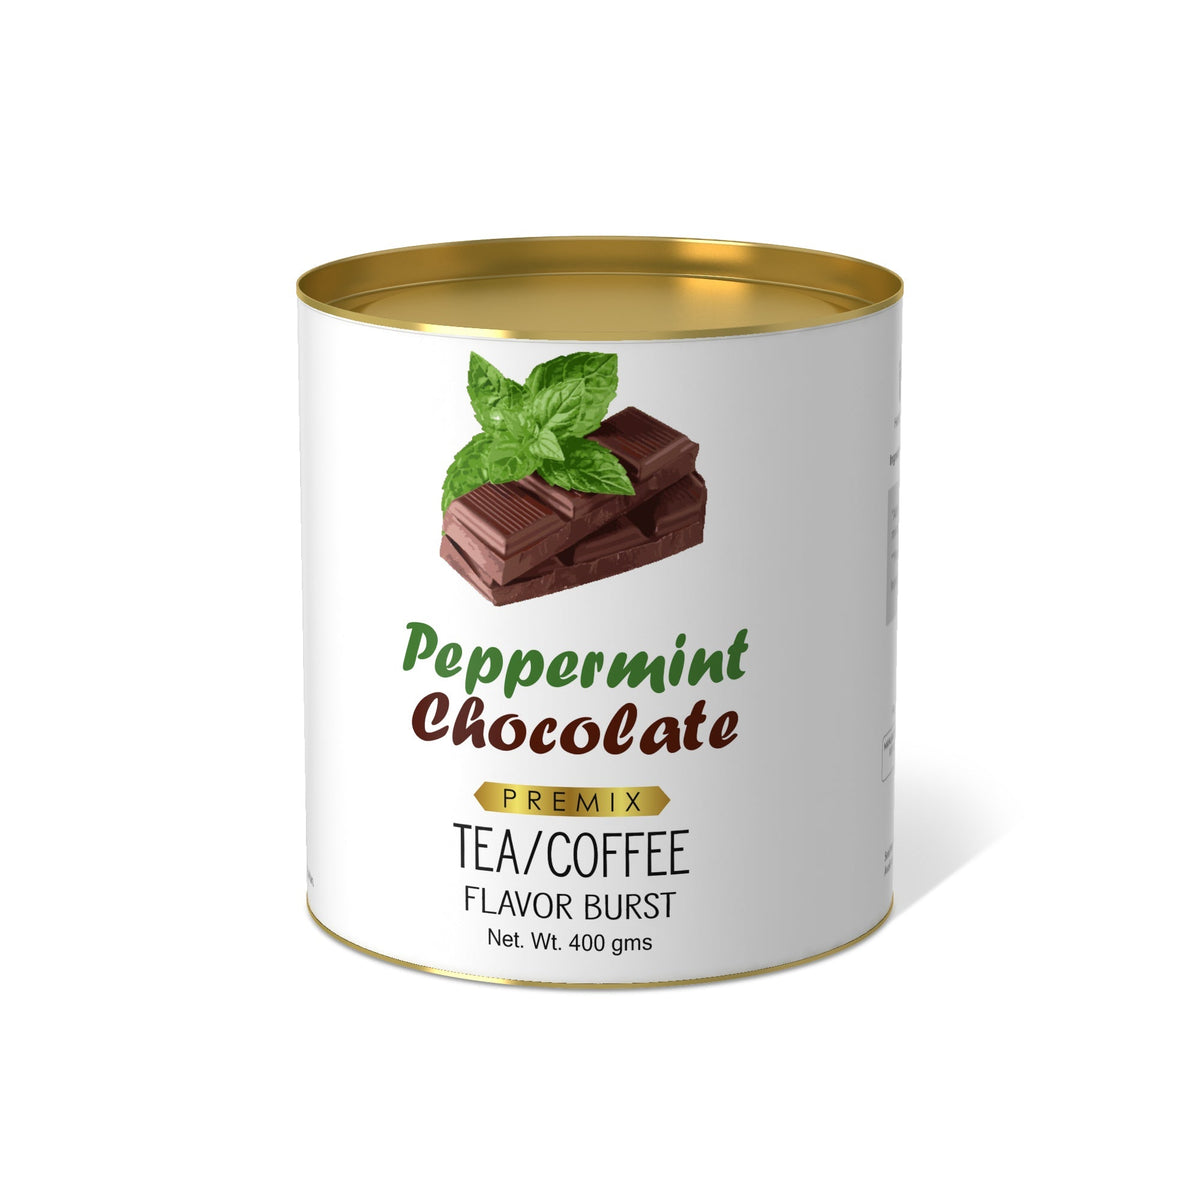 Peppermint Chocolate Flavor Burst - 800 gms